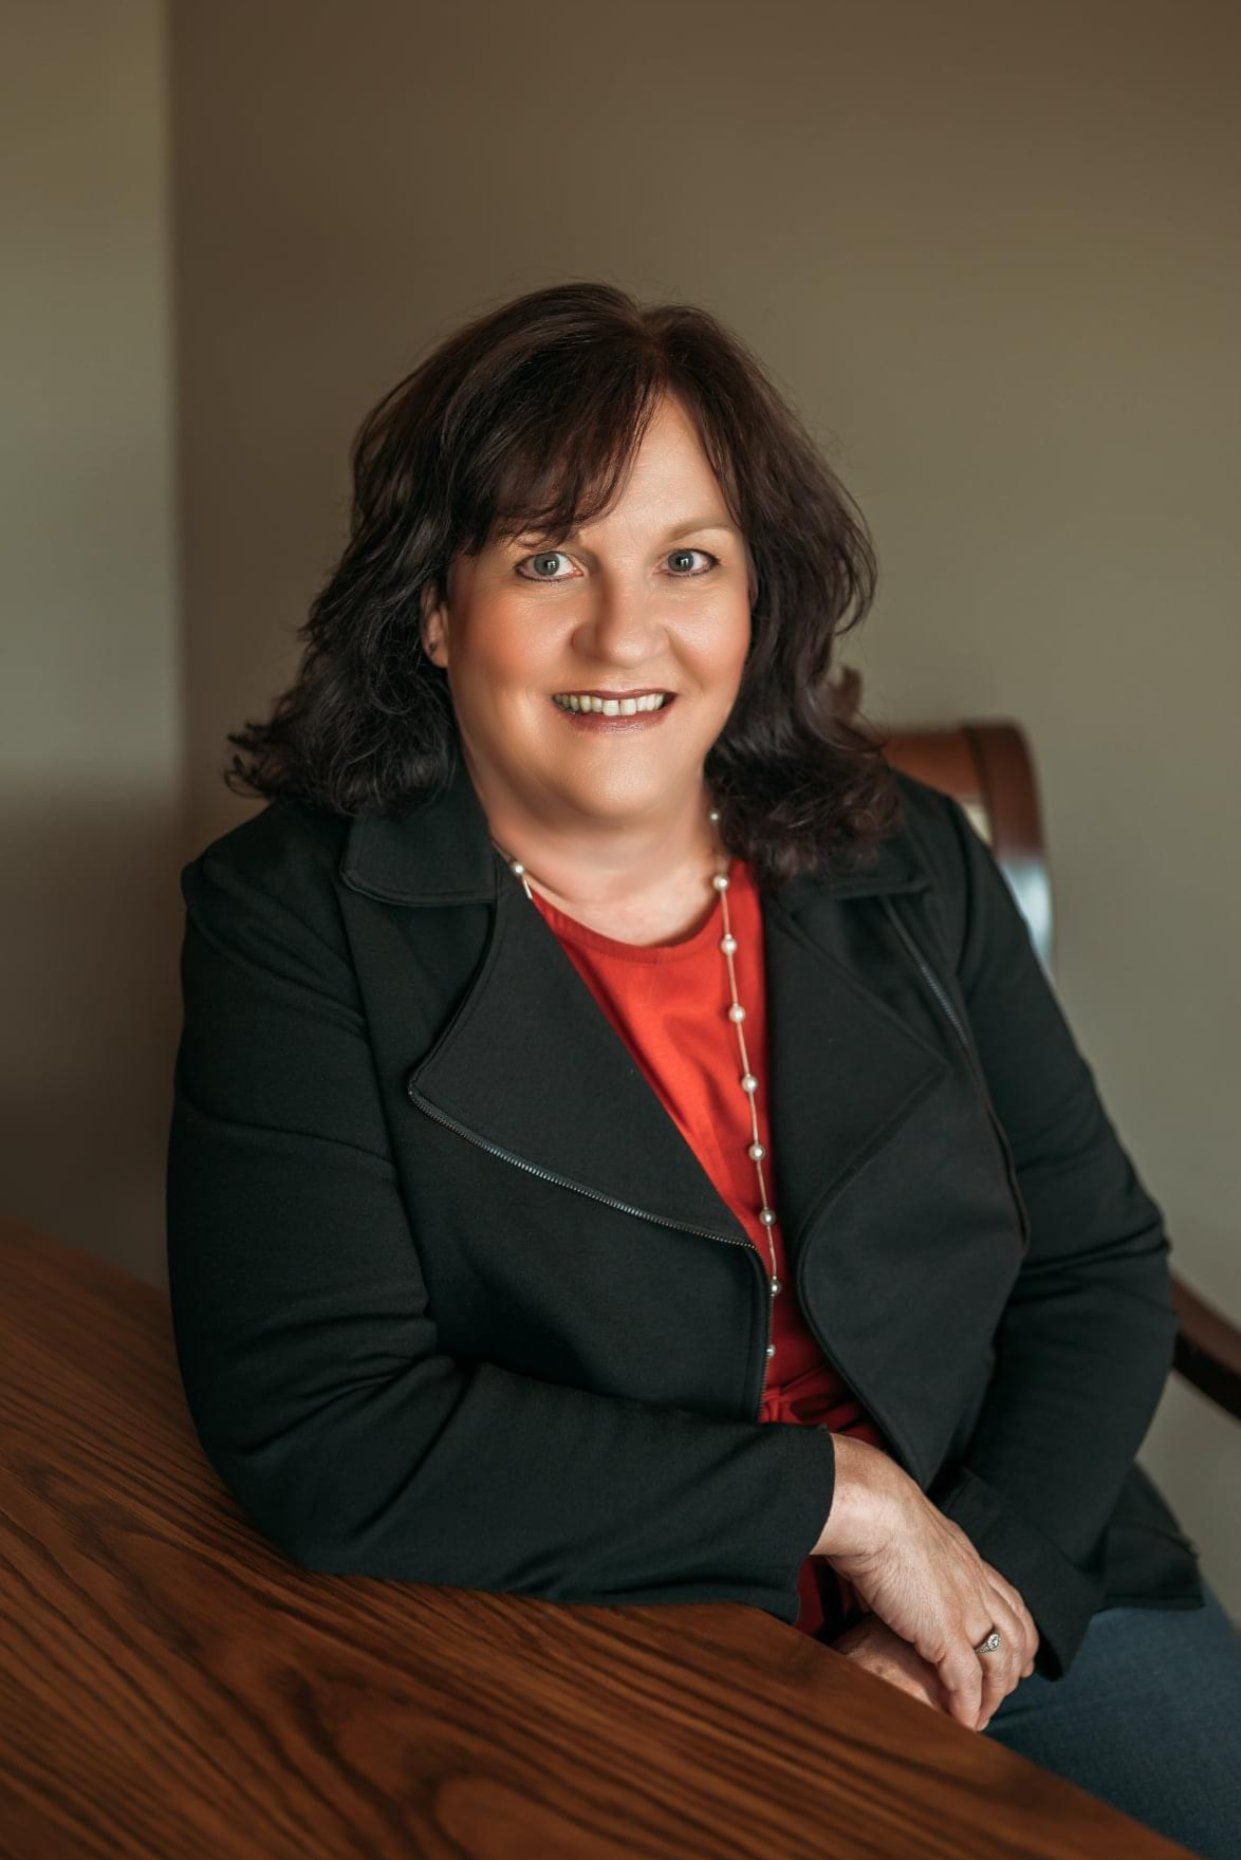 River Valley Health Network Names Lori Andreas as New Executive Director